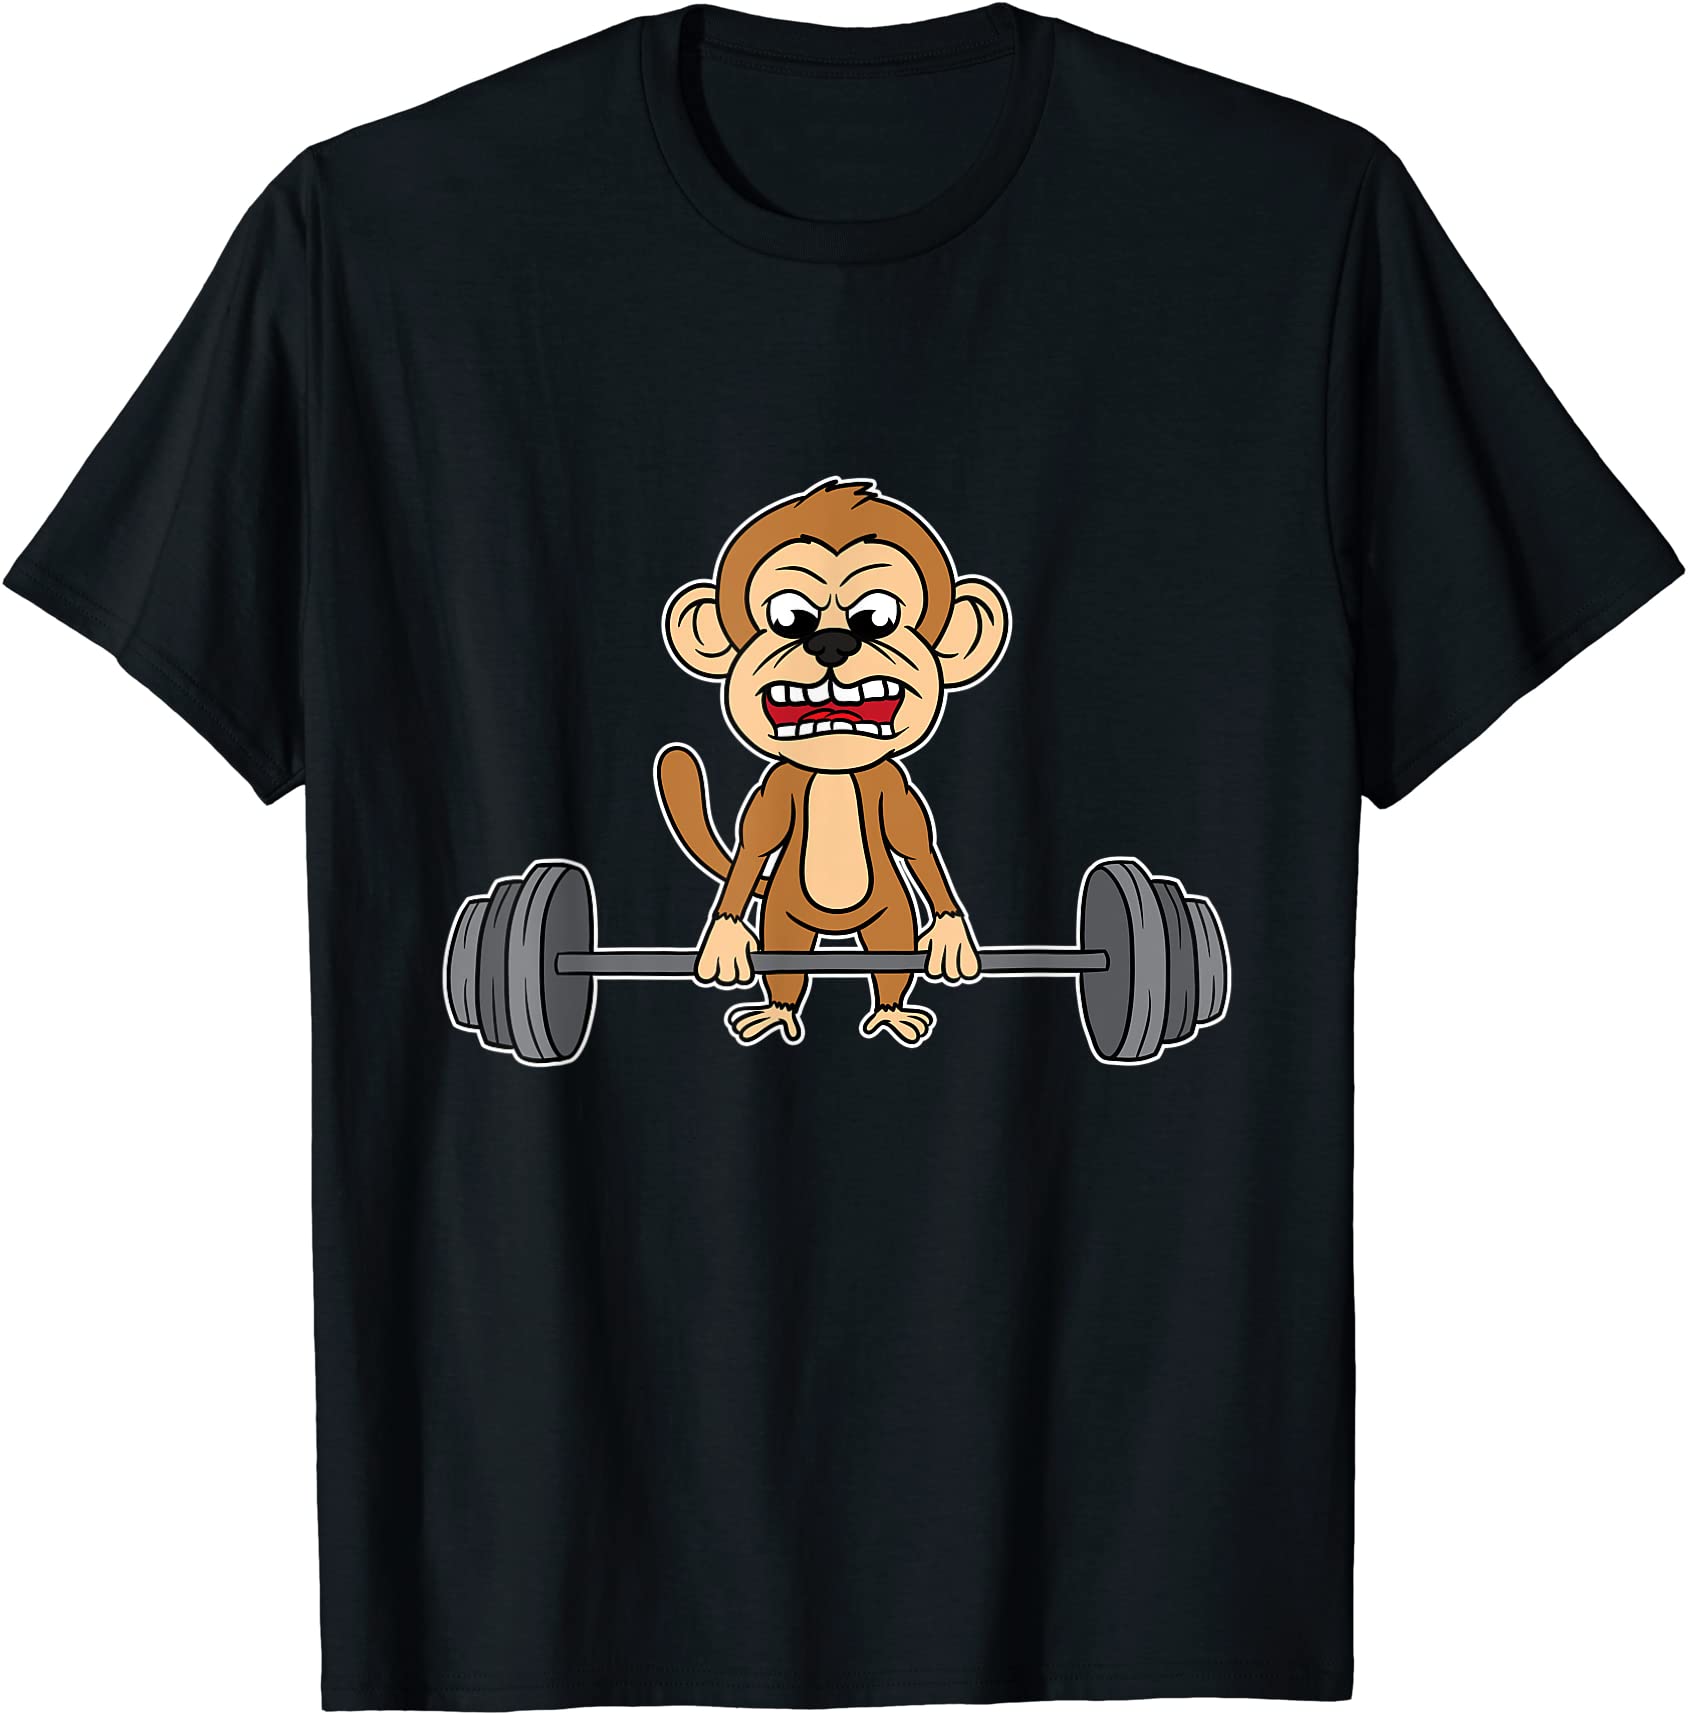 monkey weightlifting powerlifting deadlift fitness t shirt men - Buy t ...